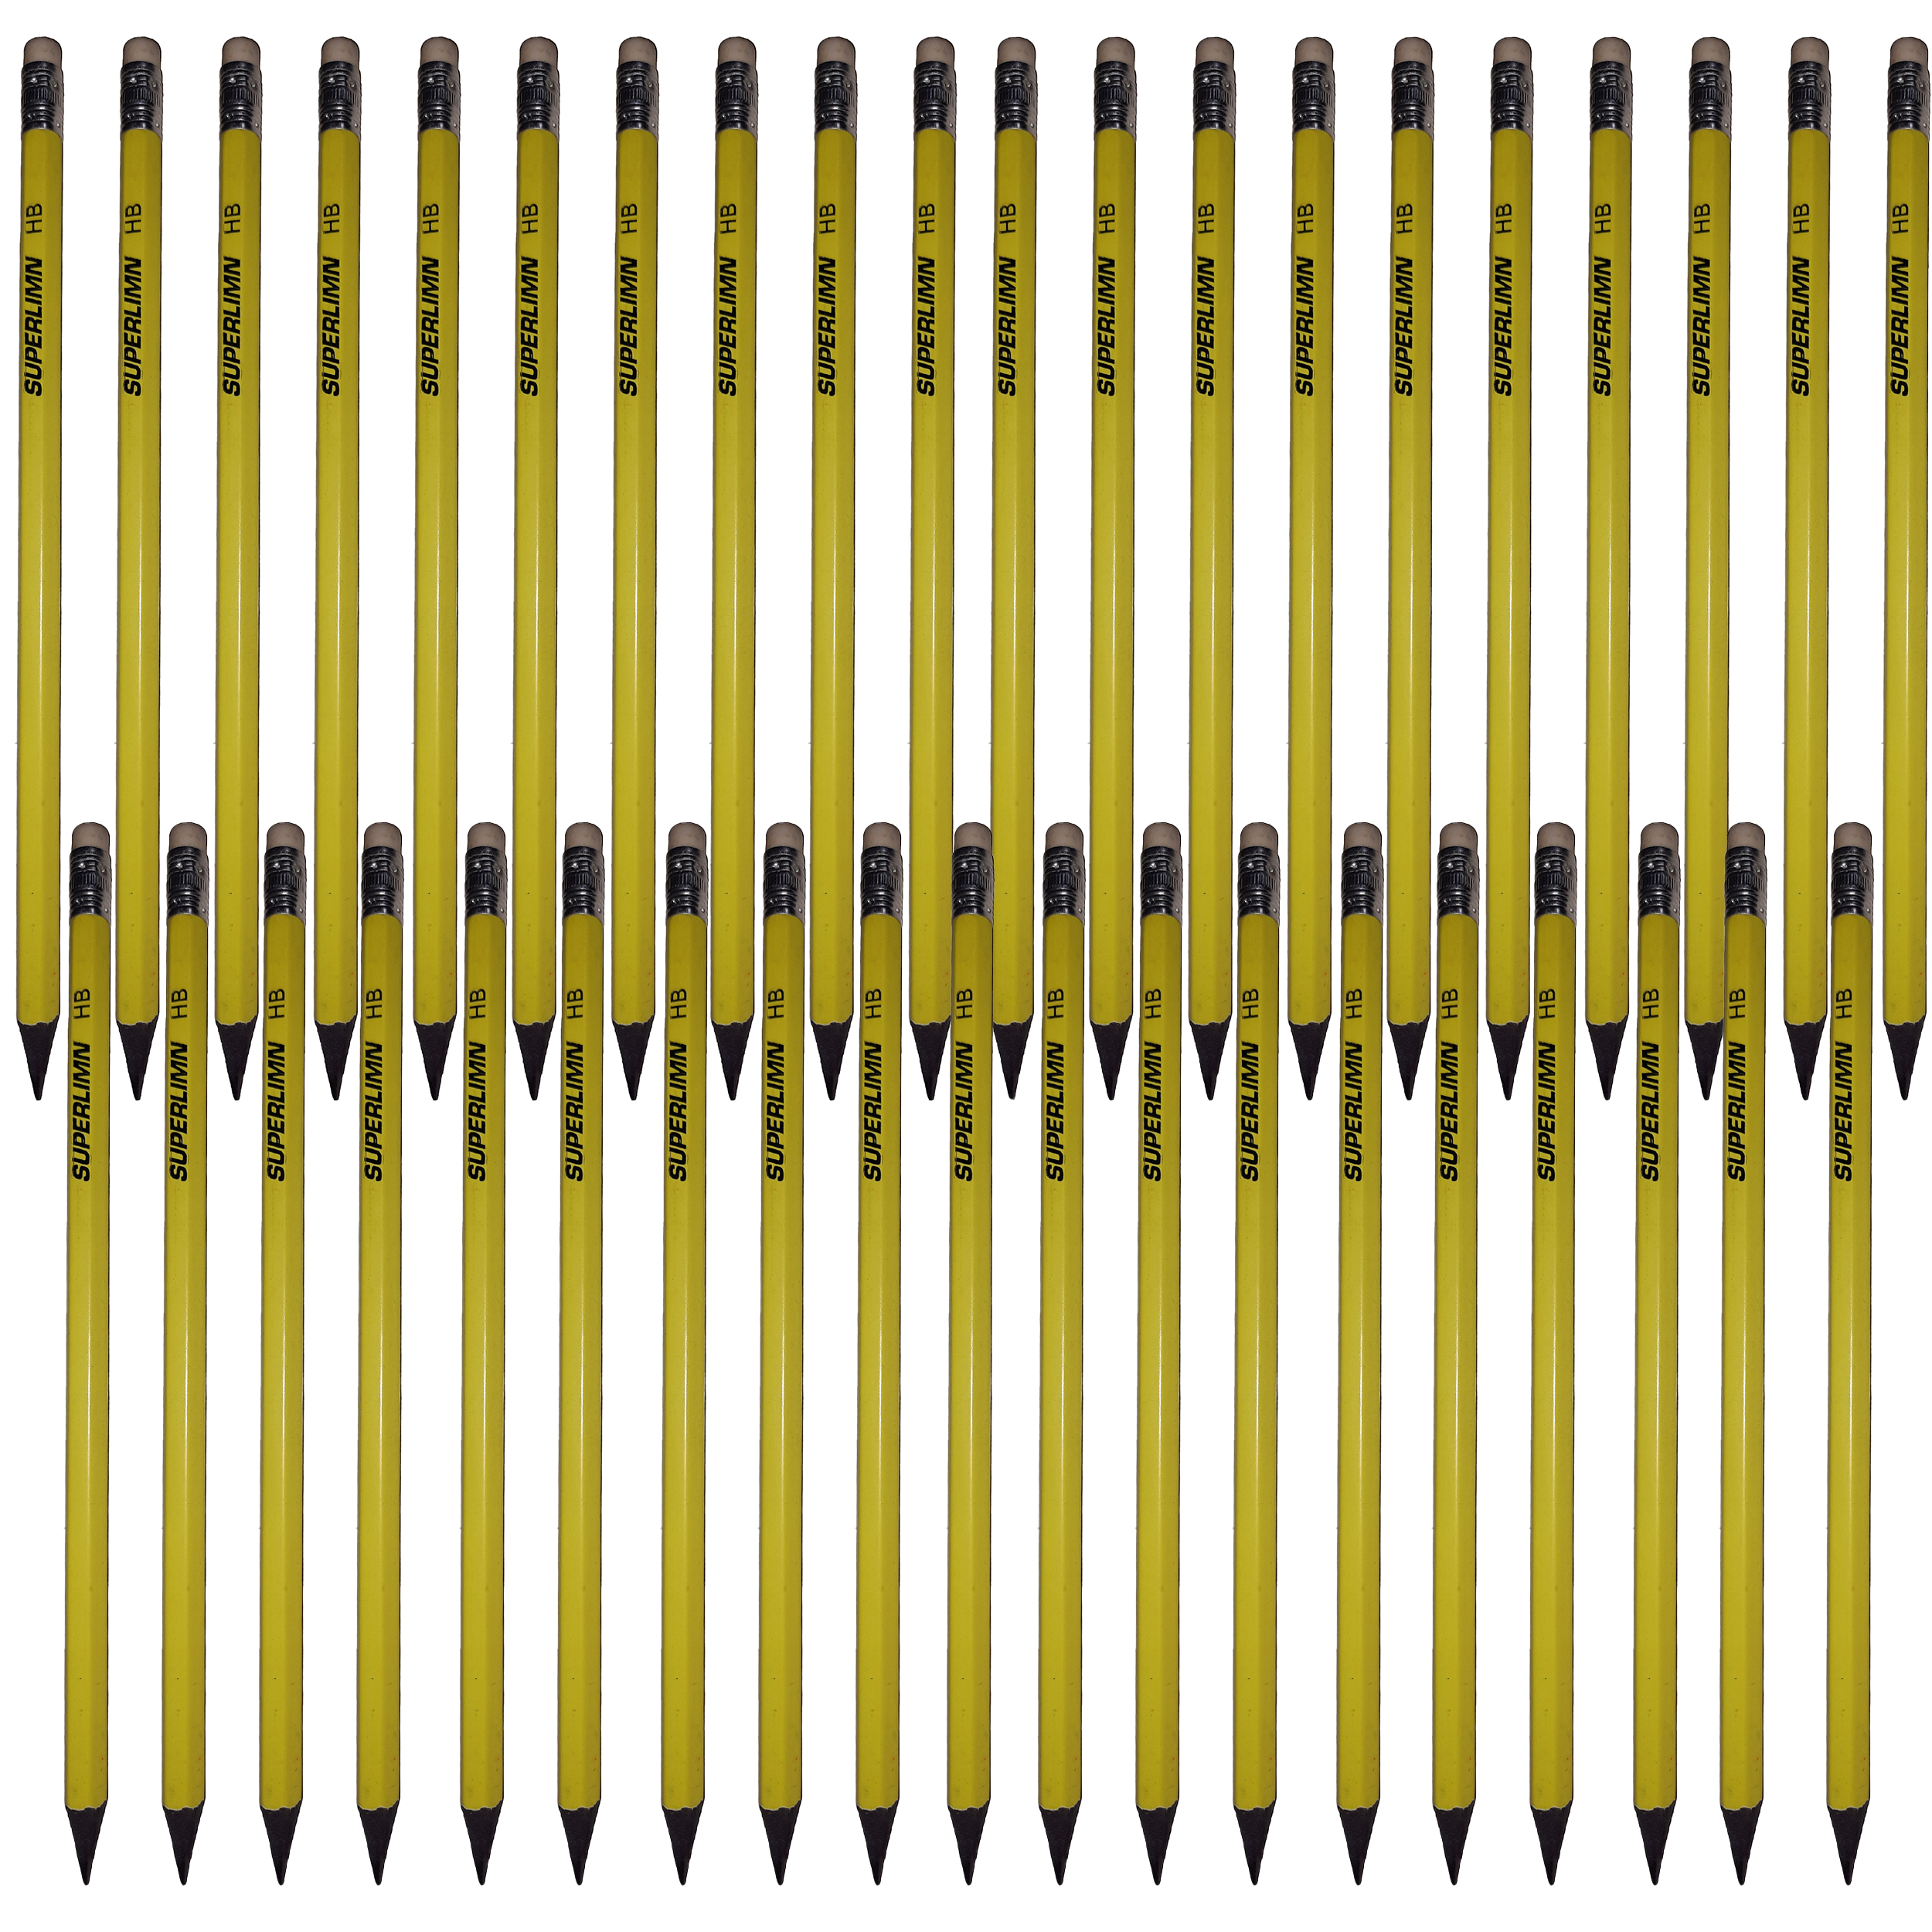 مداد سوپر لیمن مدل HB بسته 39 عددی